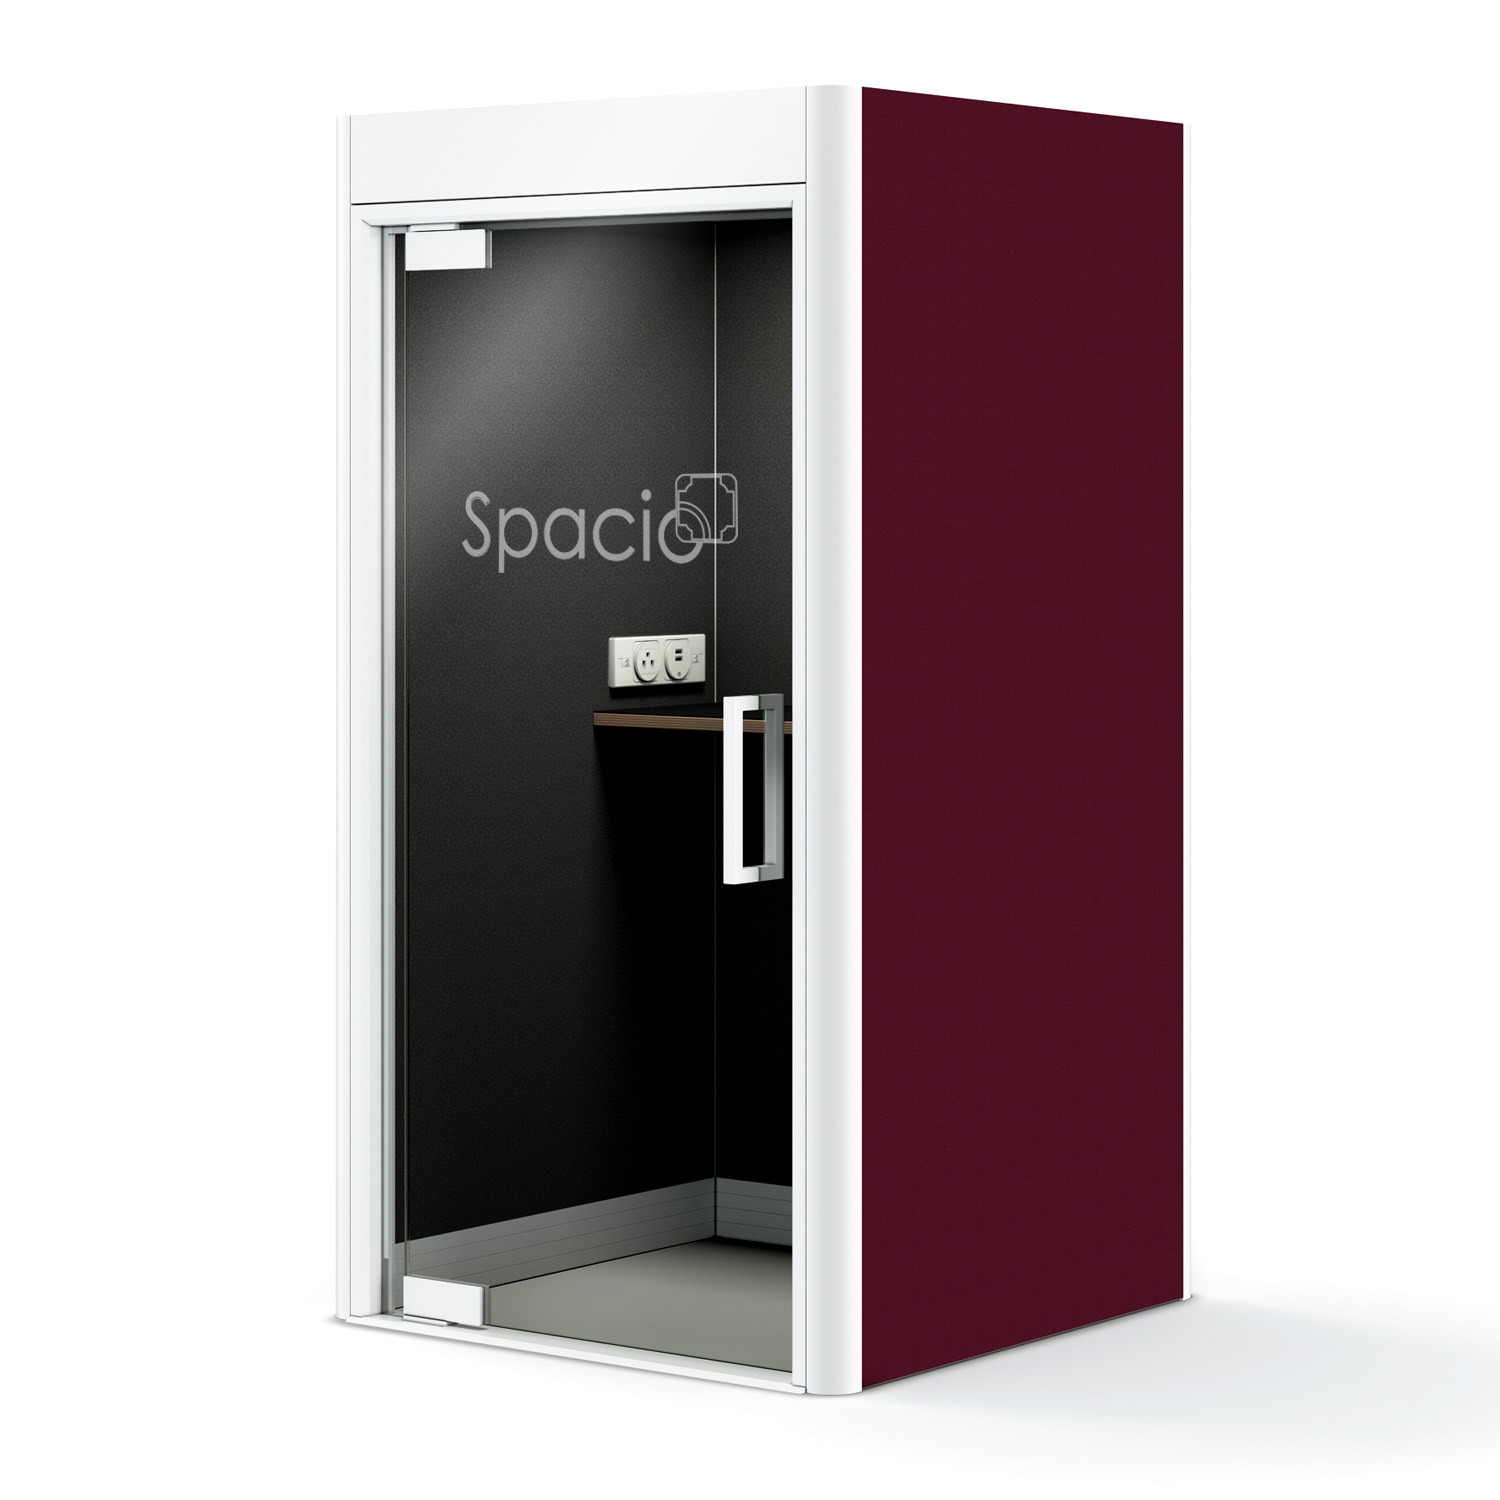 Spacio Phone Booth